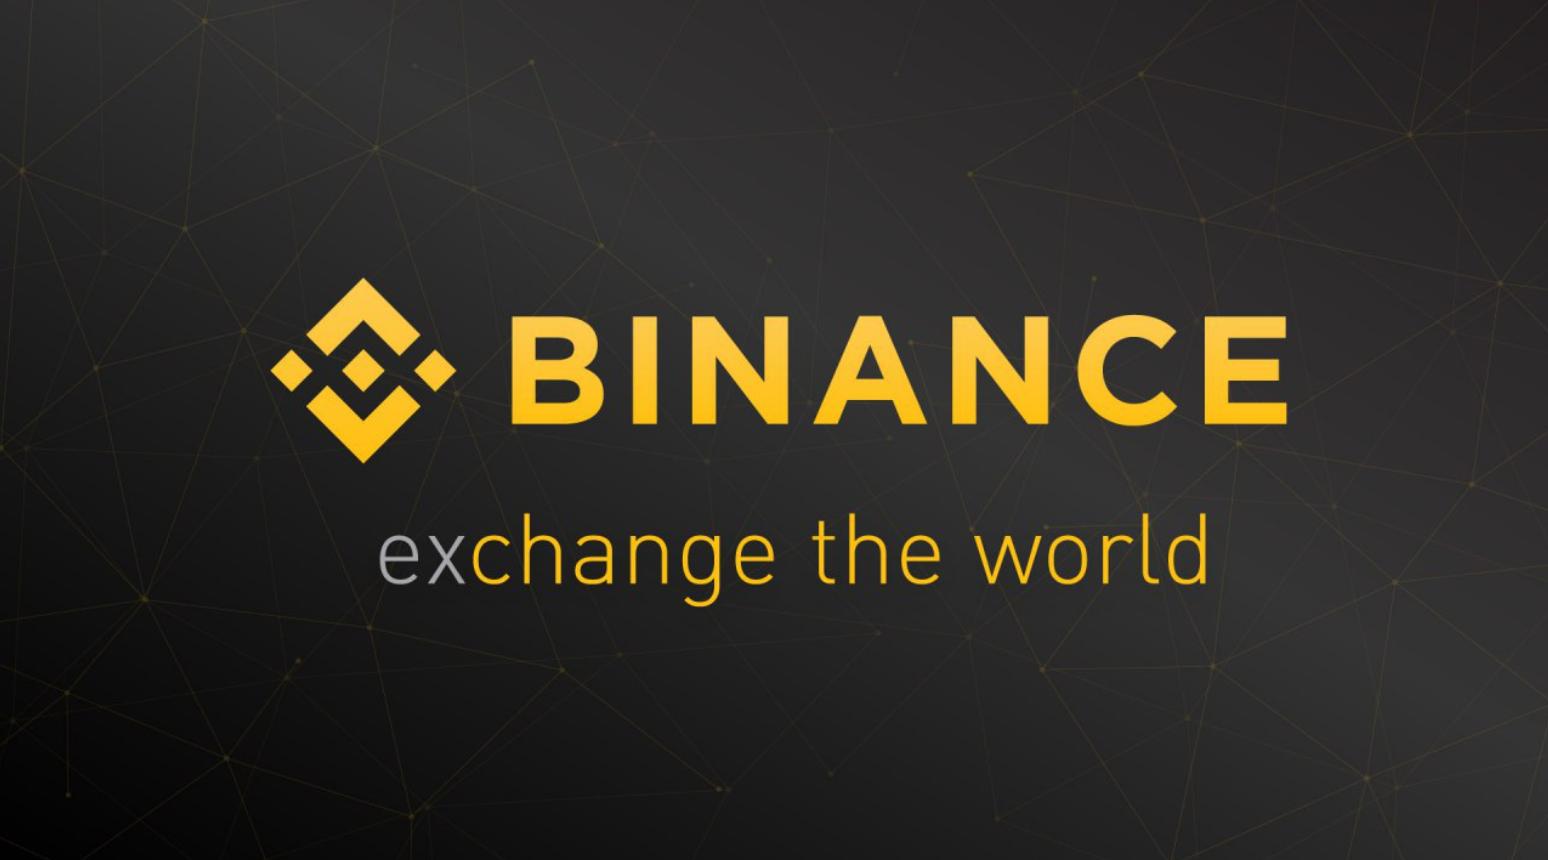 World’s largest crypto exchange: Binance logo featuring the phrase “Exchange the world”